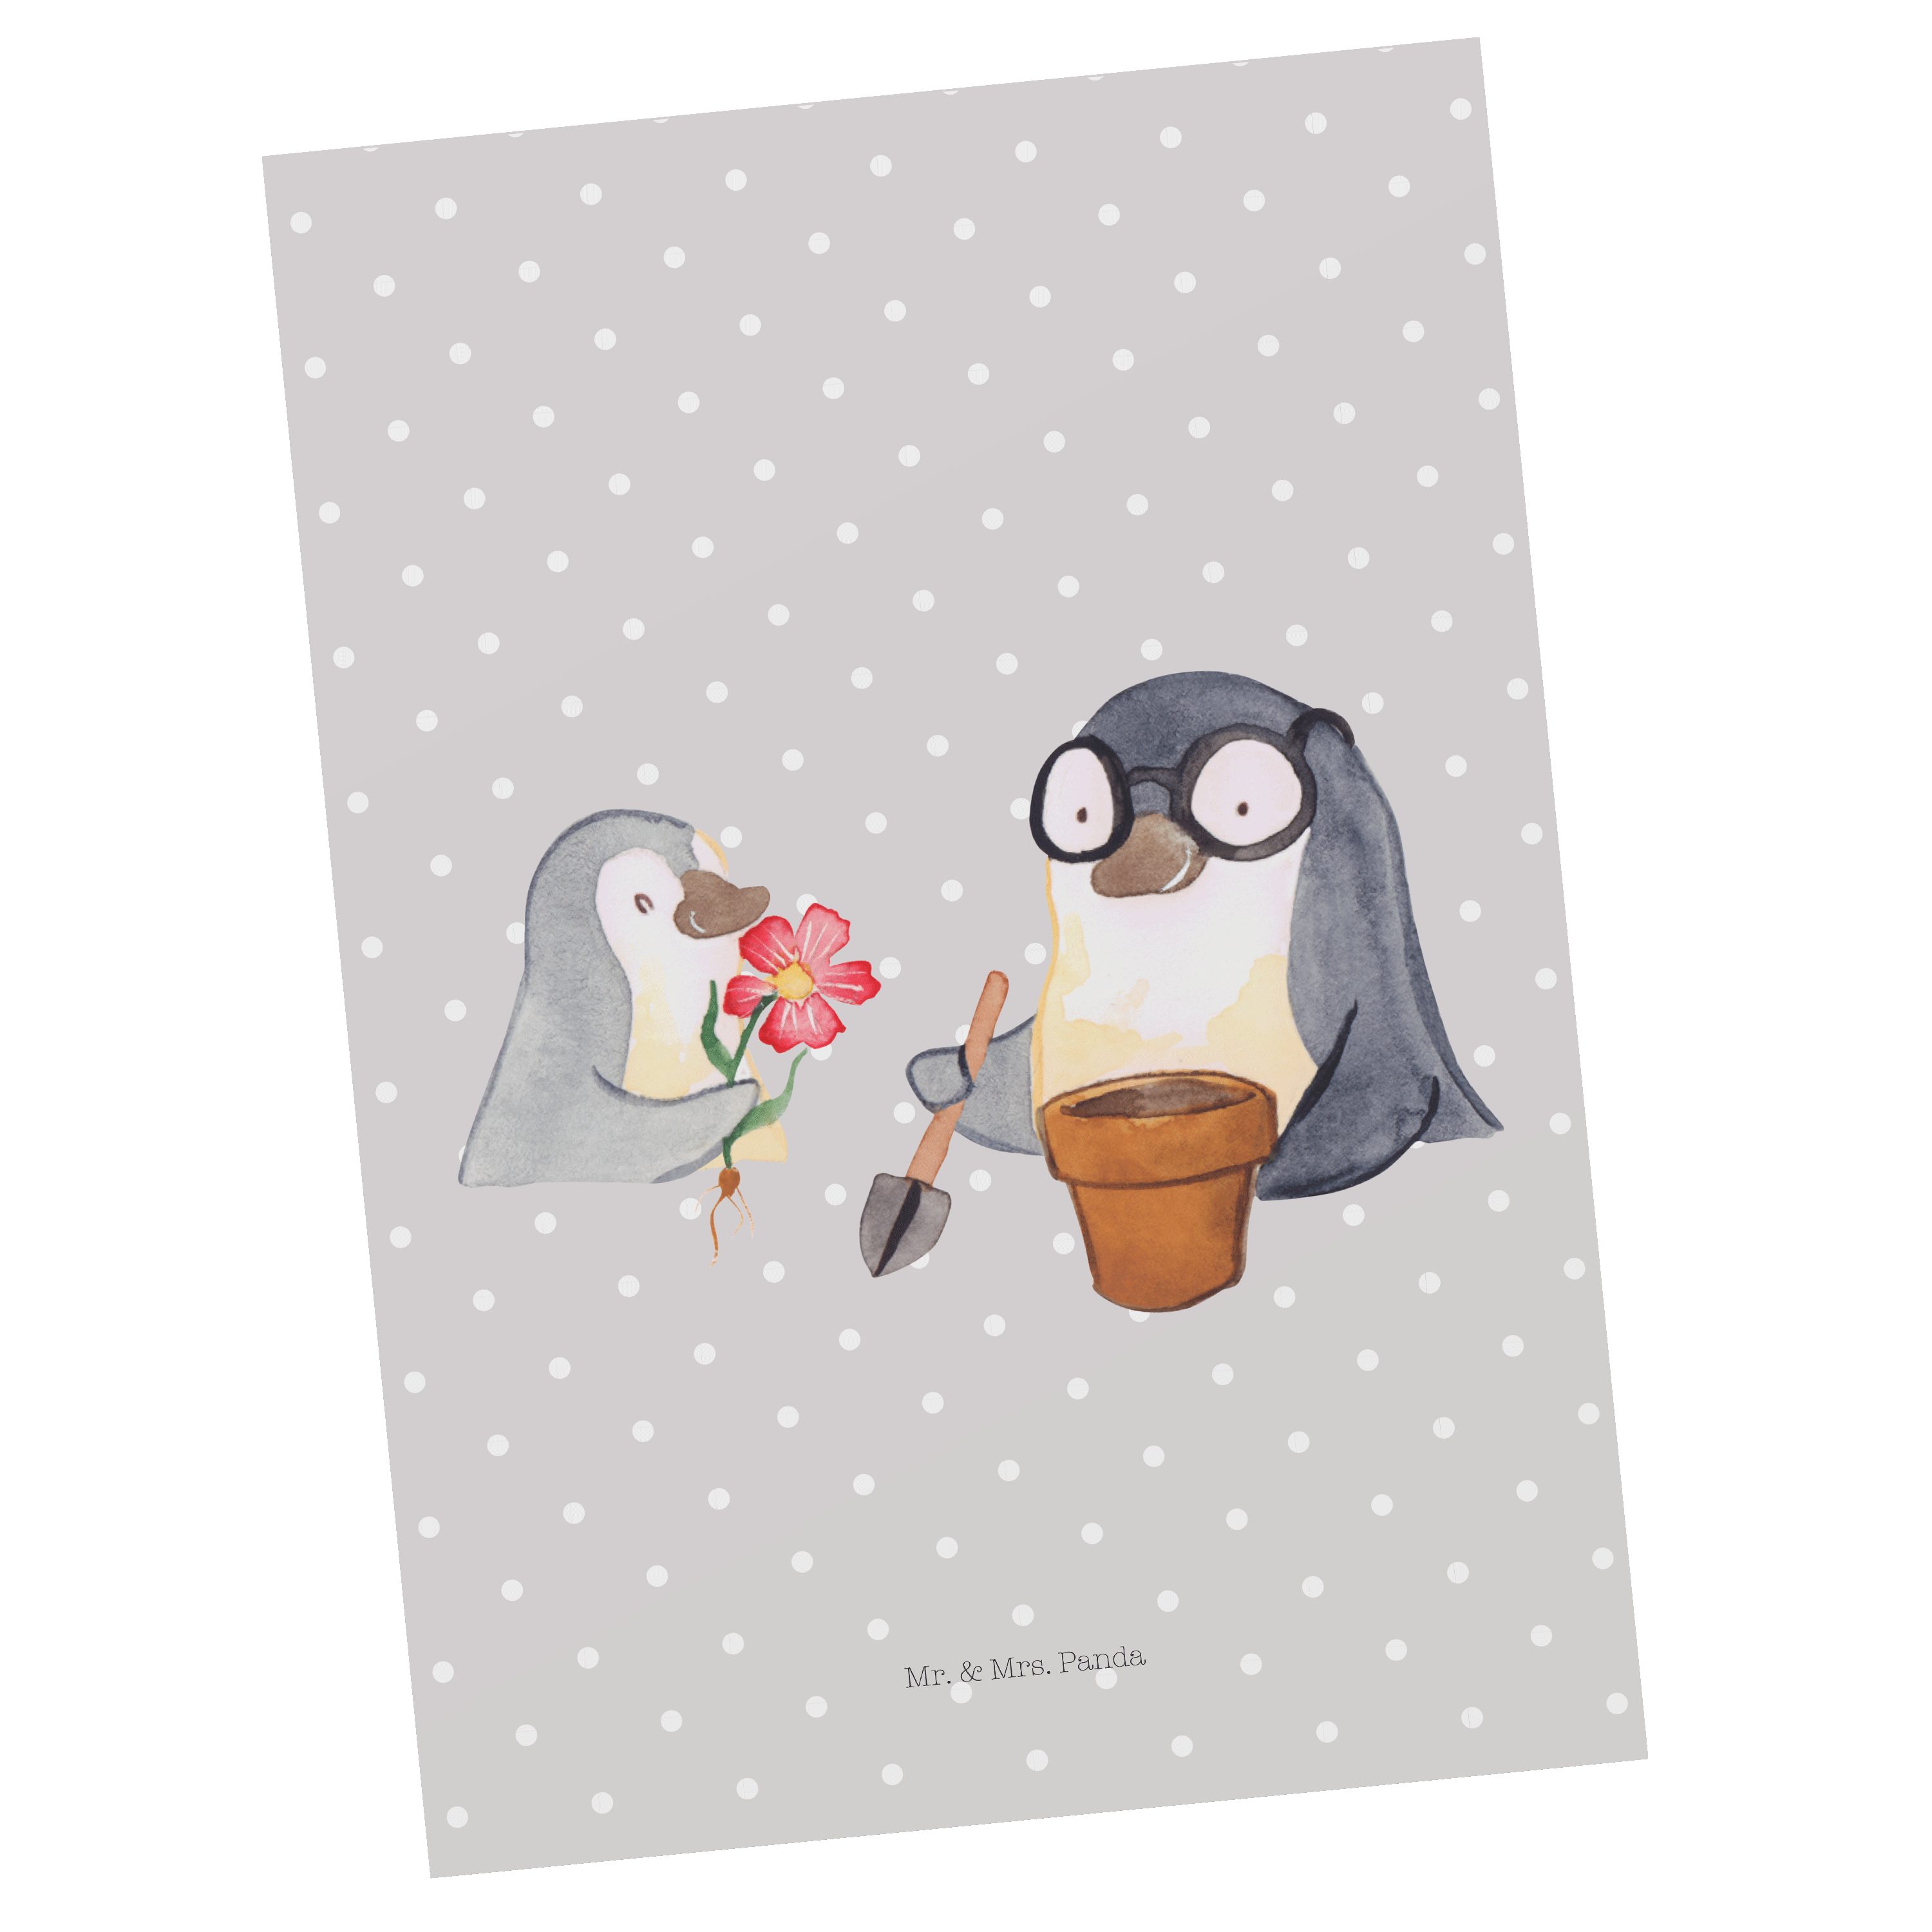 Mr. & Mrs. Panda Postkarte Pinguin Opa Blumen pflanzen - Grau Pastell - Geschenk, Lieblingsopa